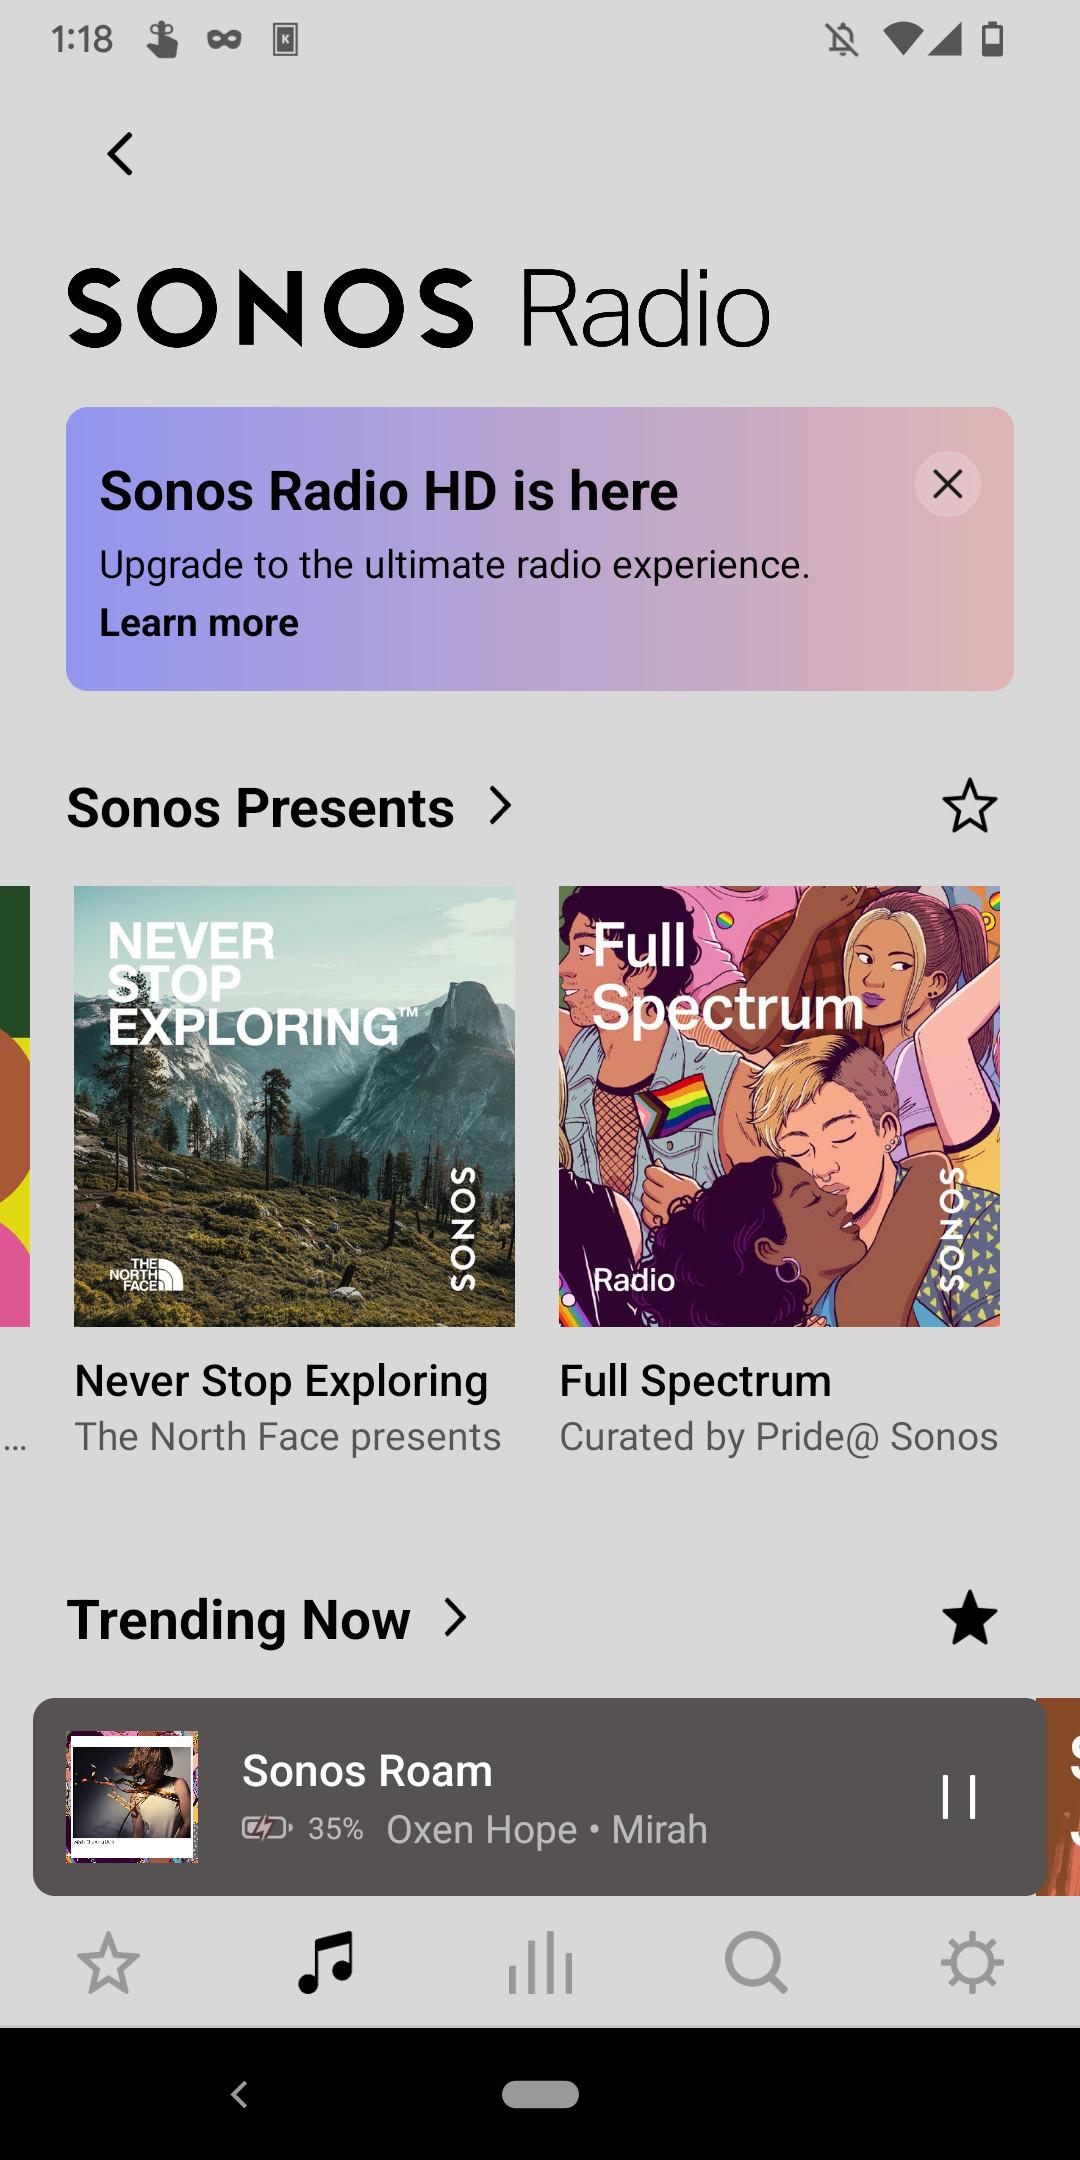 Screenshot of the Sonos mobile app showing the Sonos Radio service.